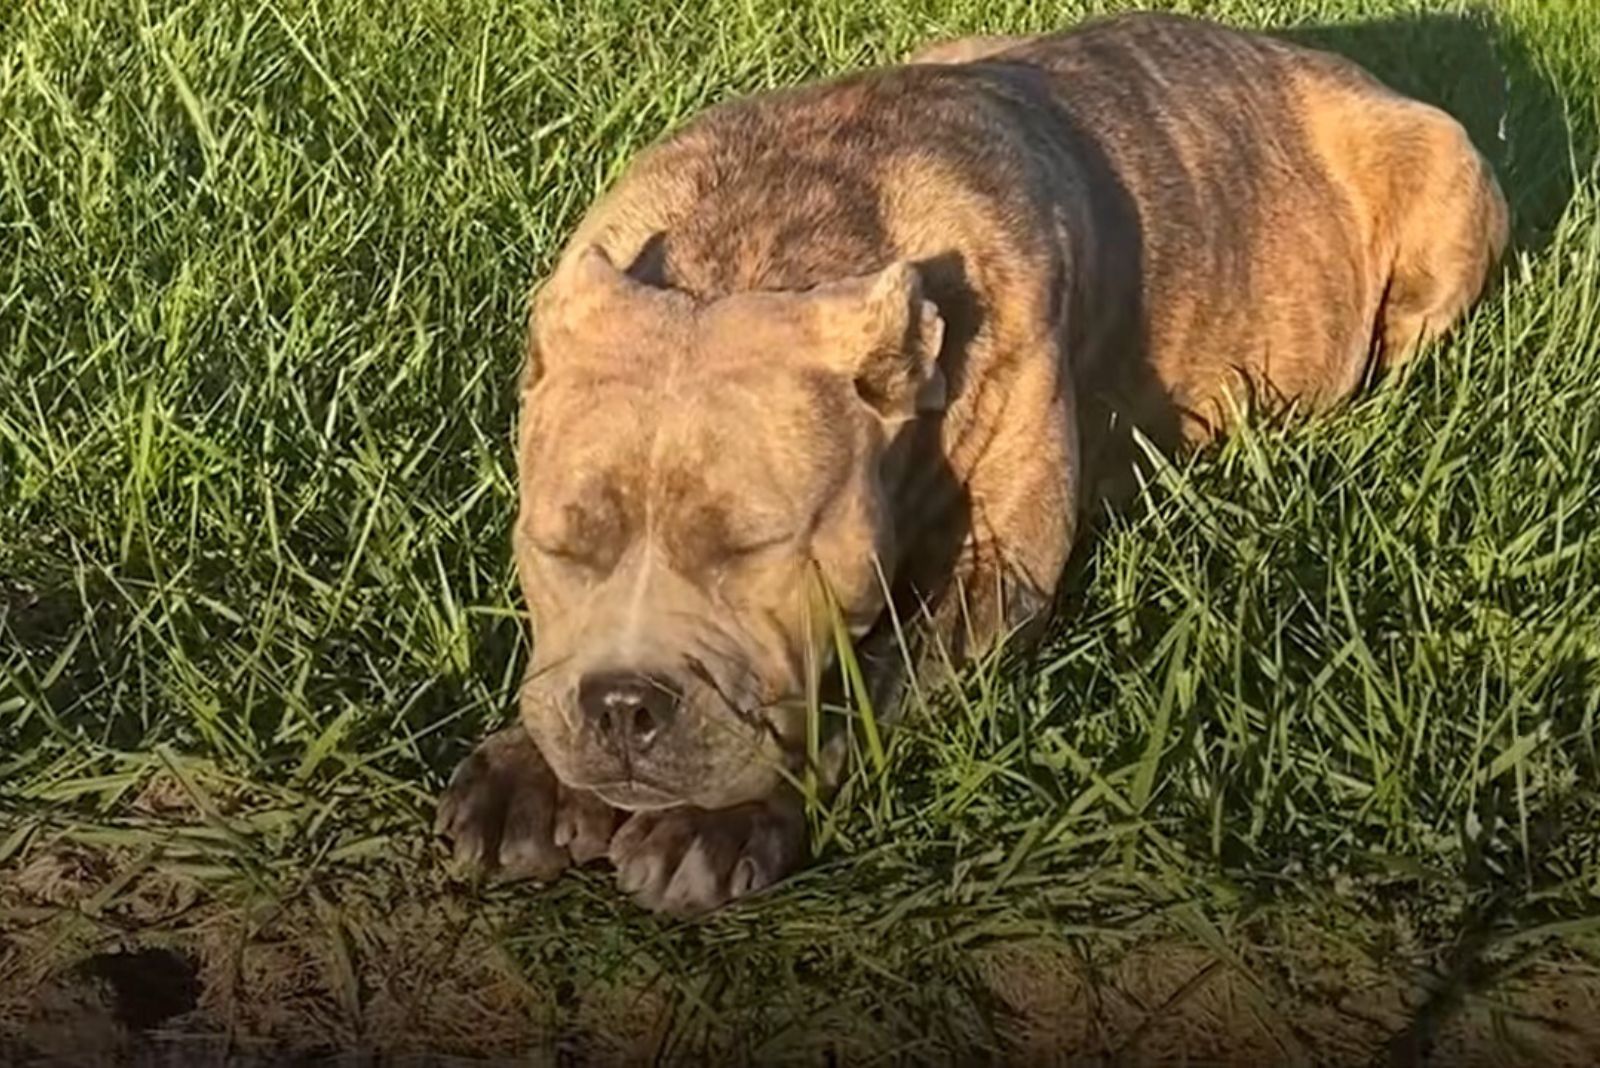 pitbull sleeping on grass